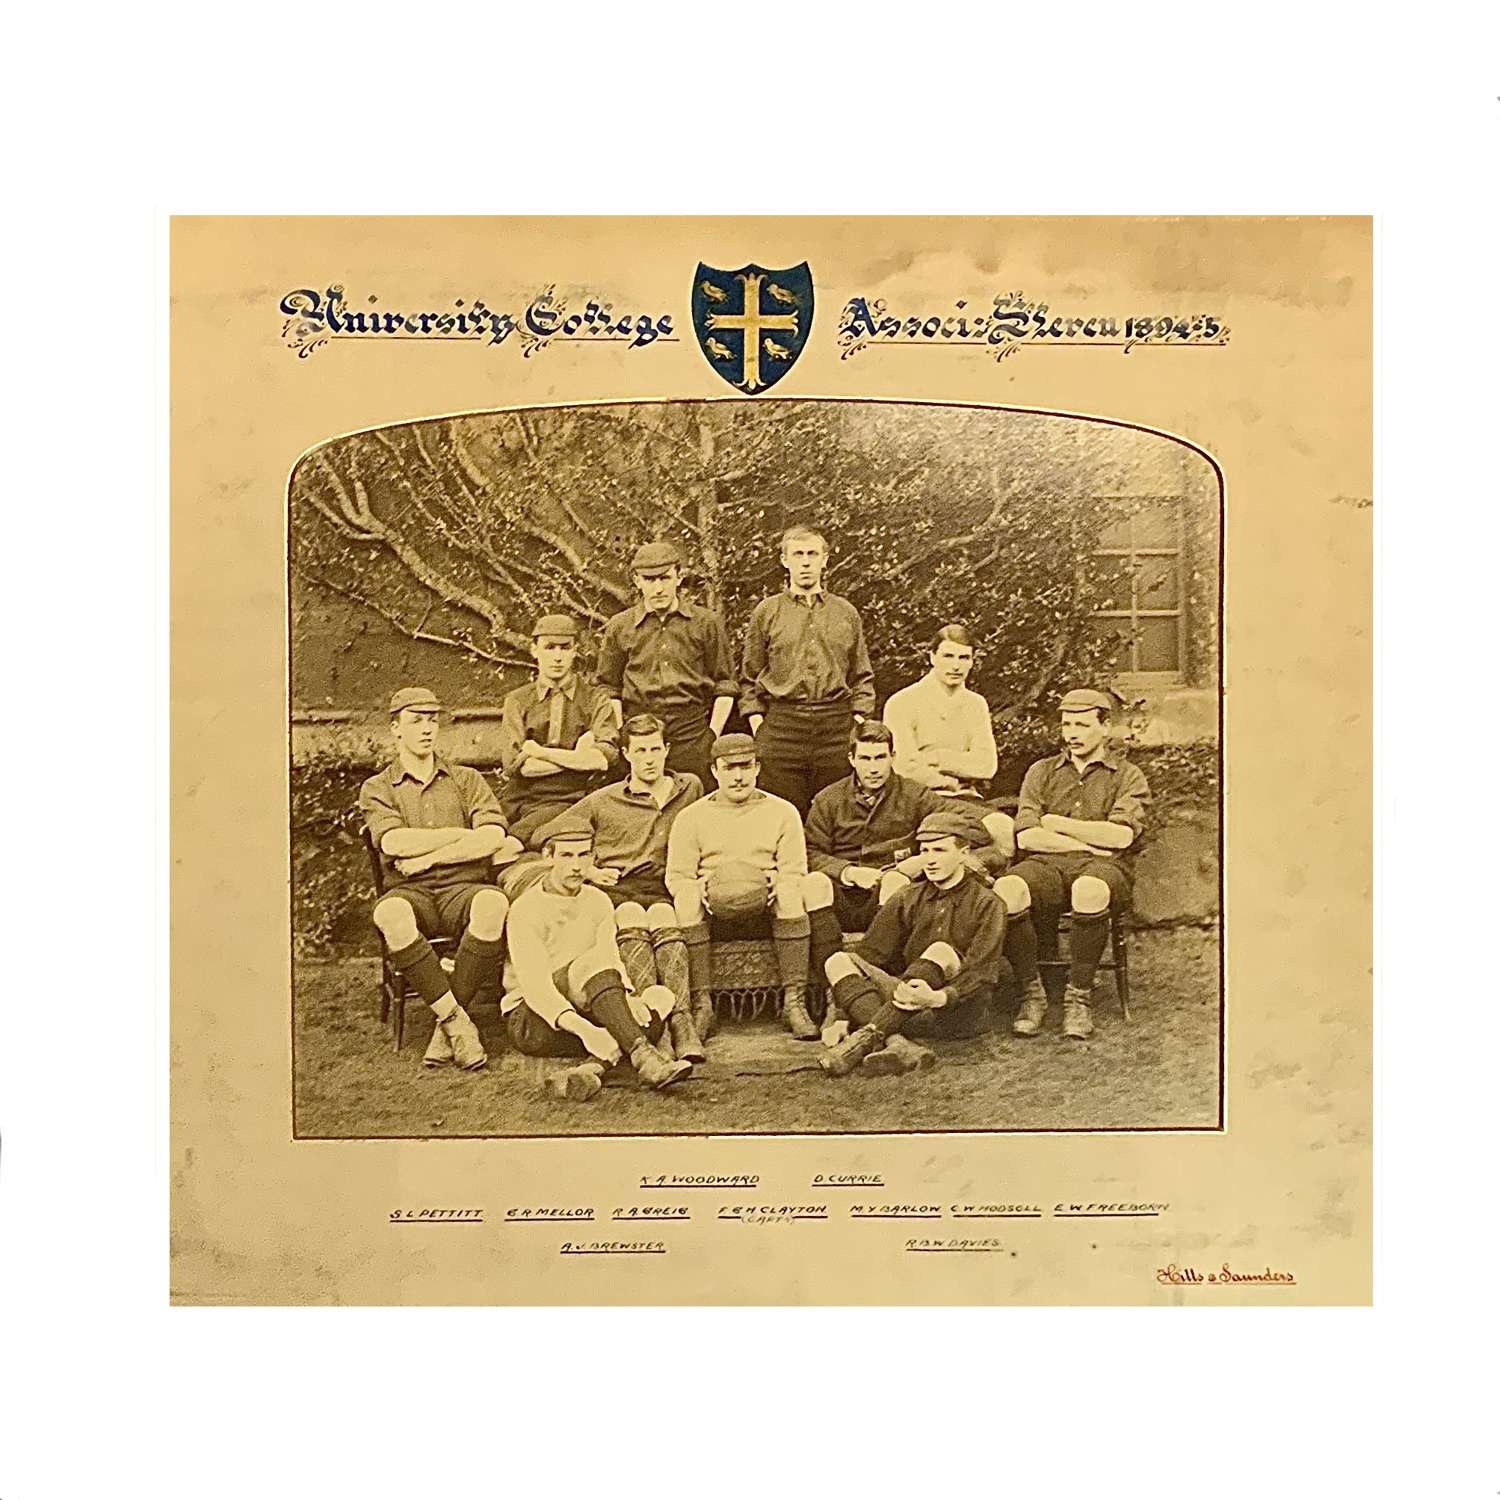 University College Oxford 1894-95 Association Football Team Photograph